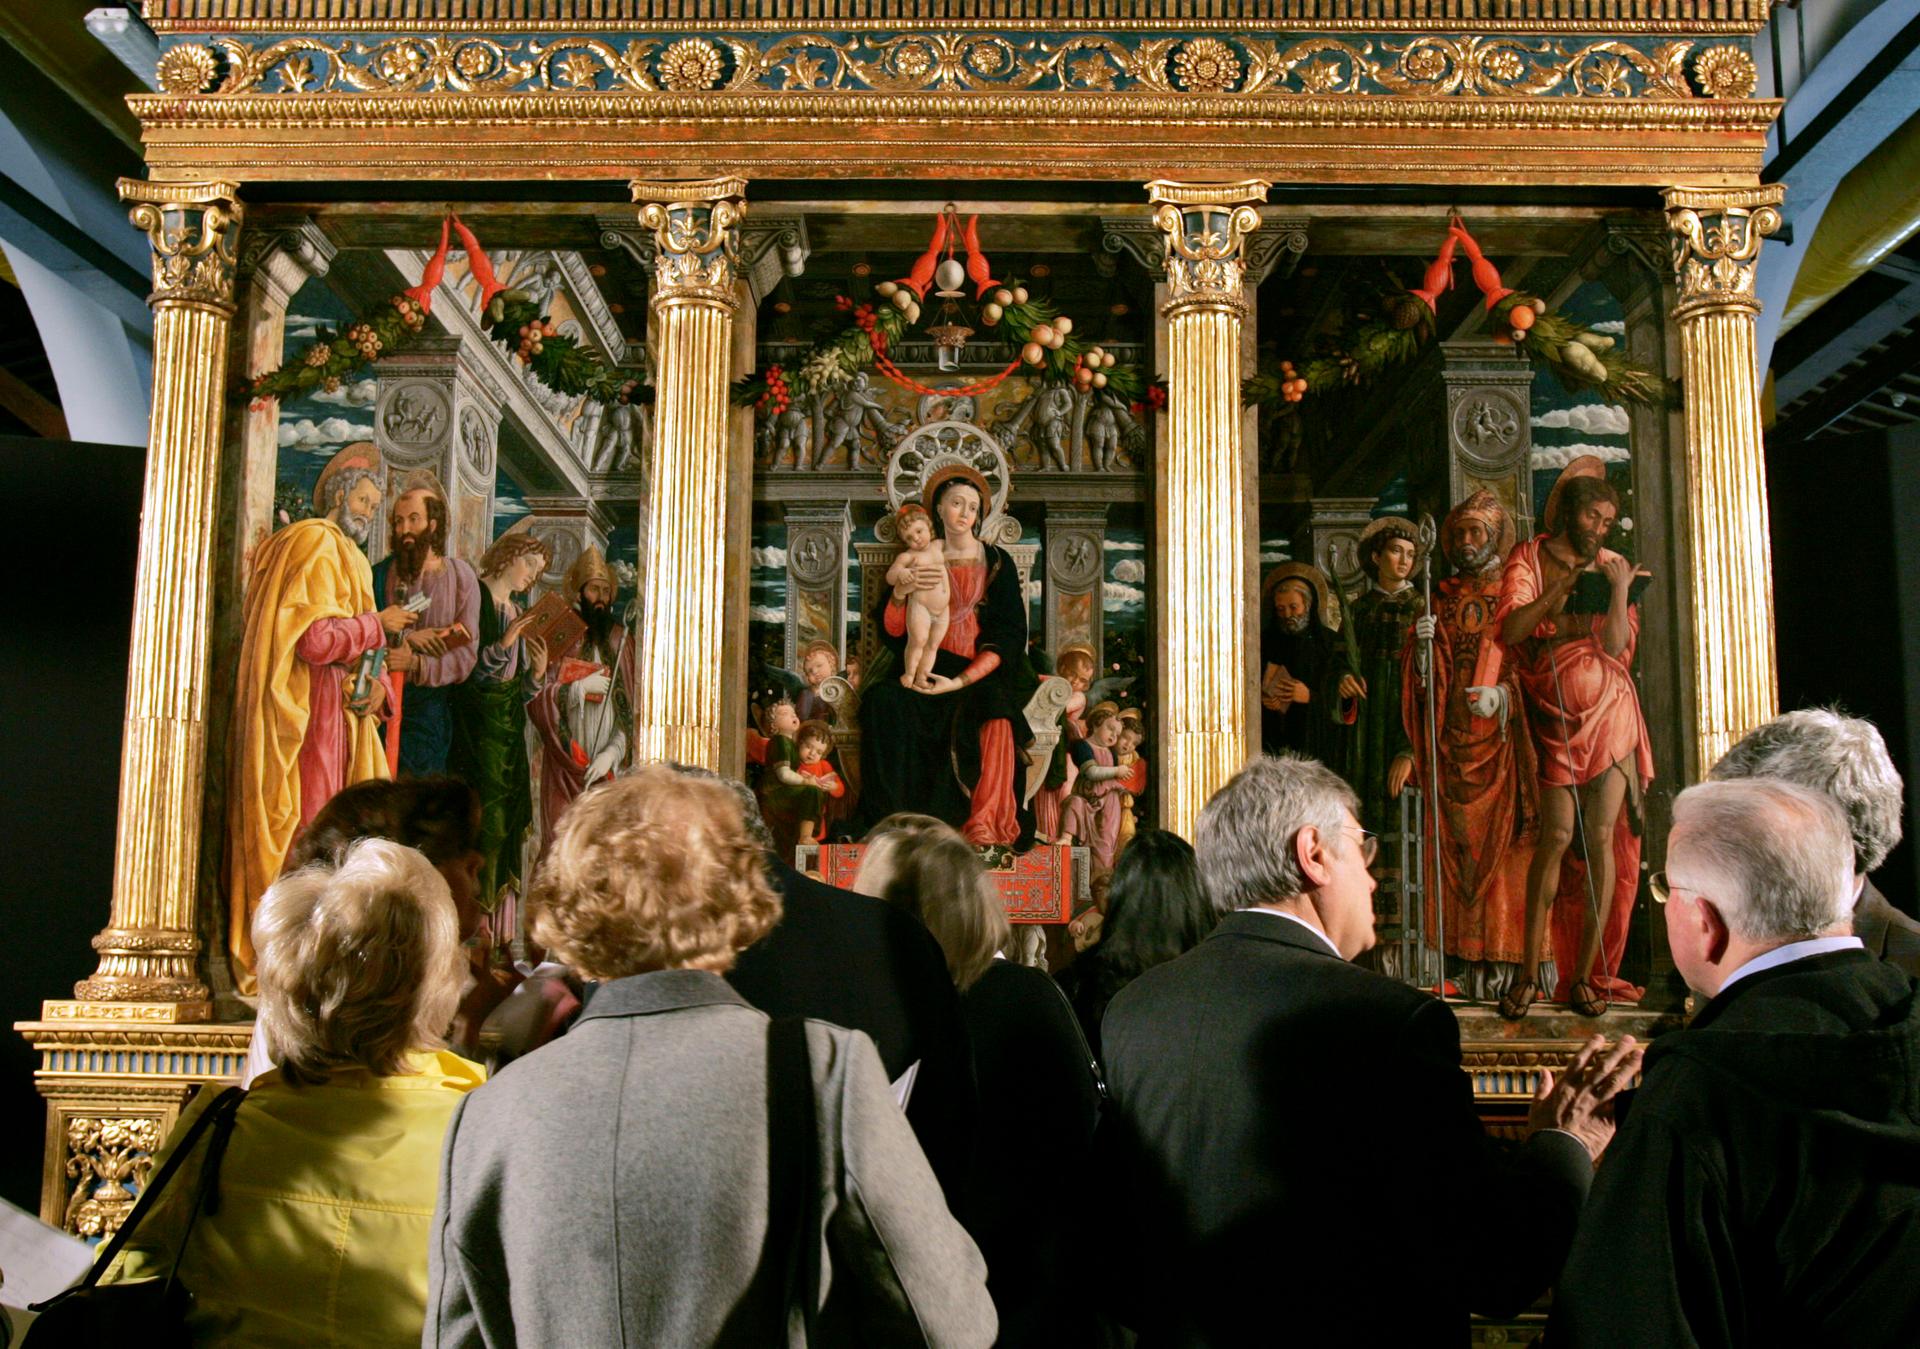 The triptych San Zeno Altarpiece, painted by Venetian Renaissance artist Andrea Mantegna. It is in the Basilica of San Zeno in Verona.